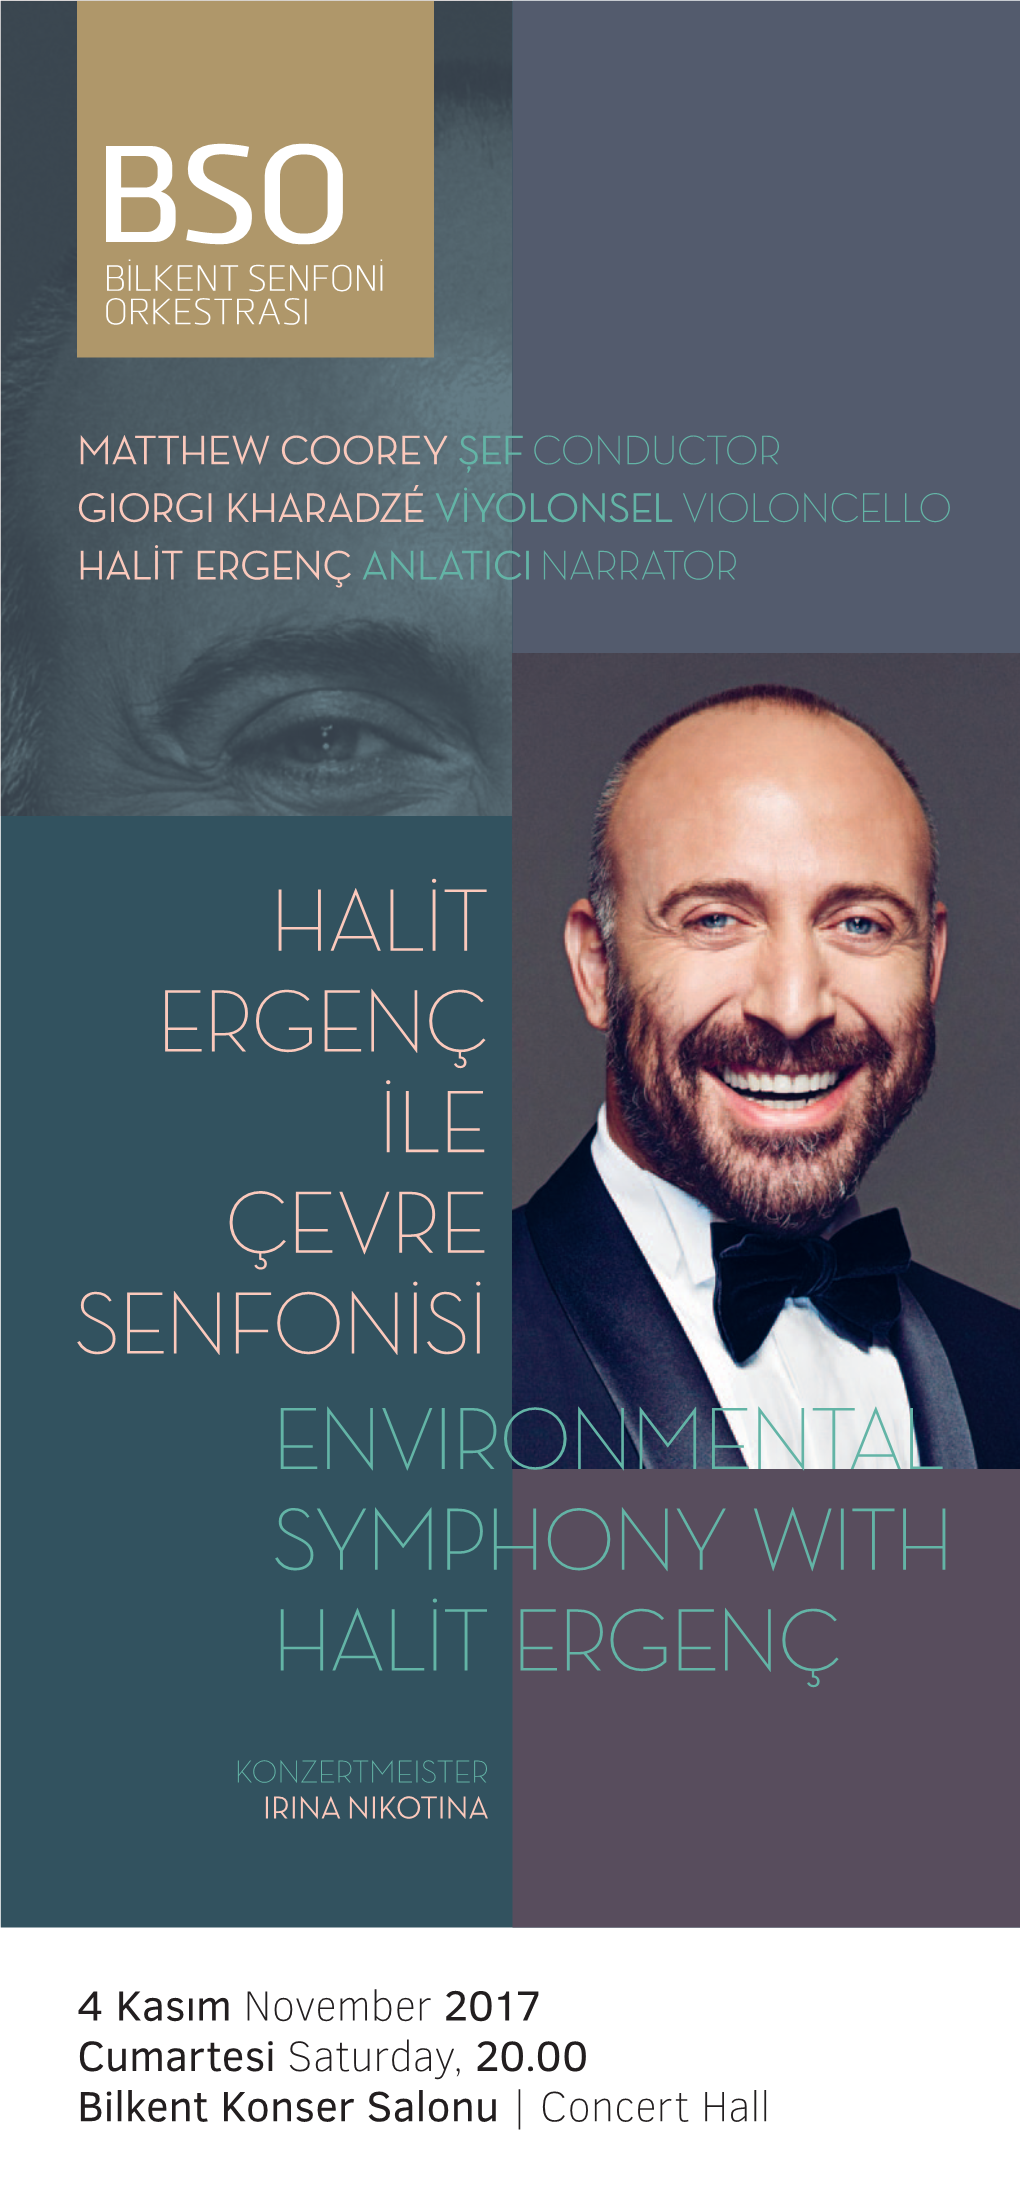 Halit Ergenç Ile Çevre Senfonisi Environmental Symphony with Halit Ergenç